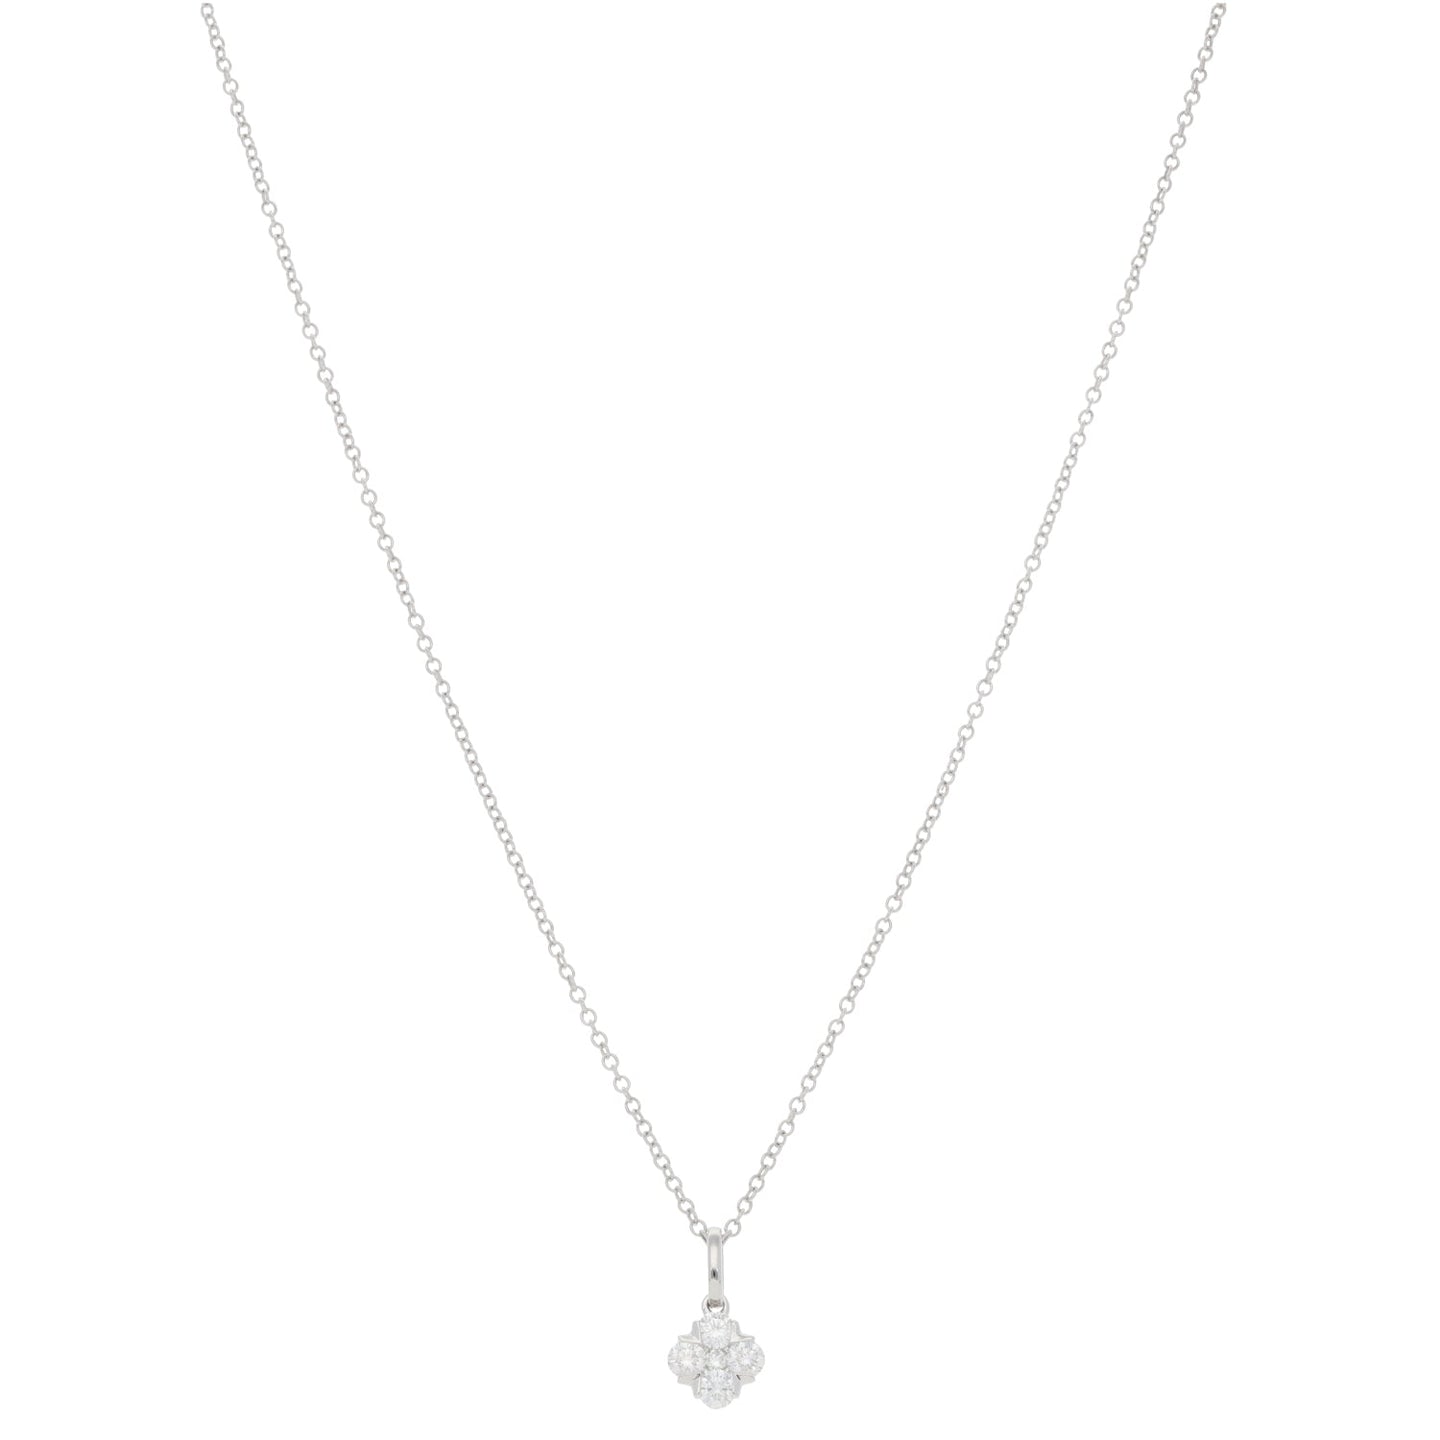 New 9ct White Gold Diamond Posy Pendant With Chain